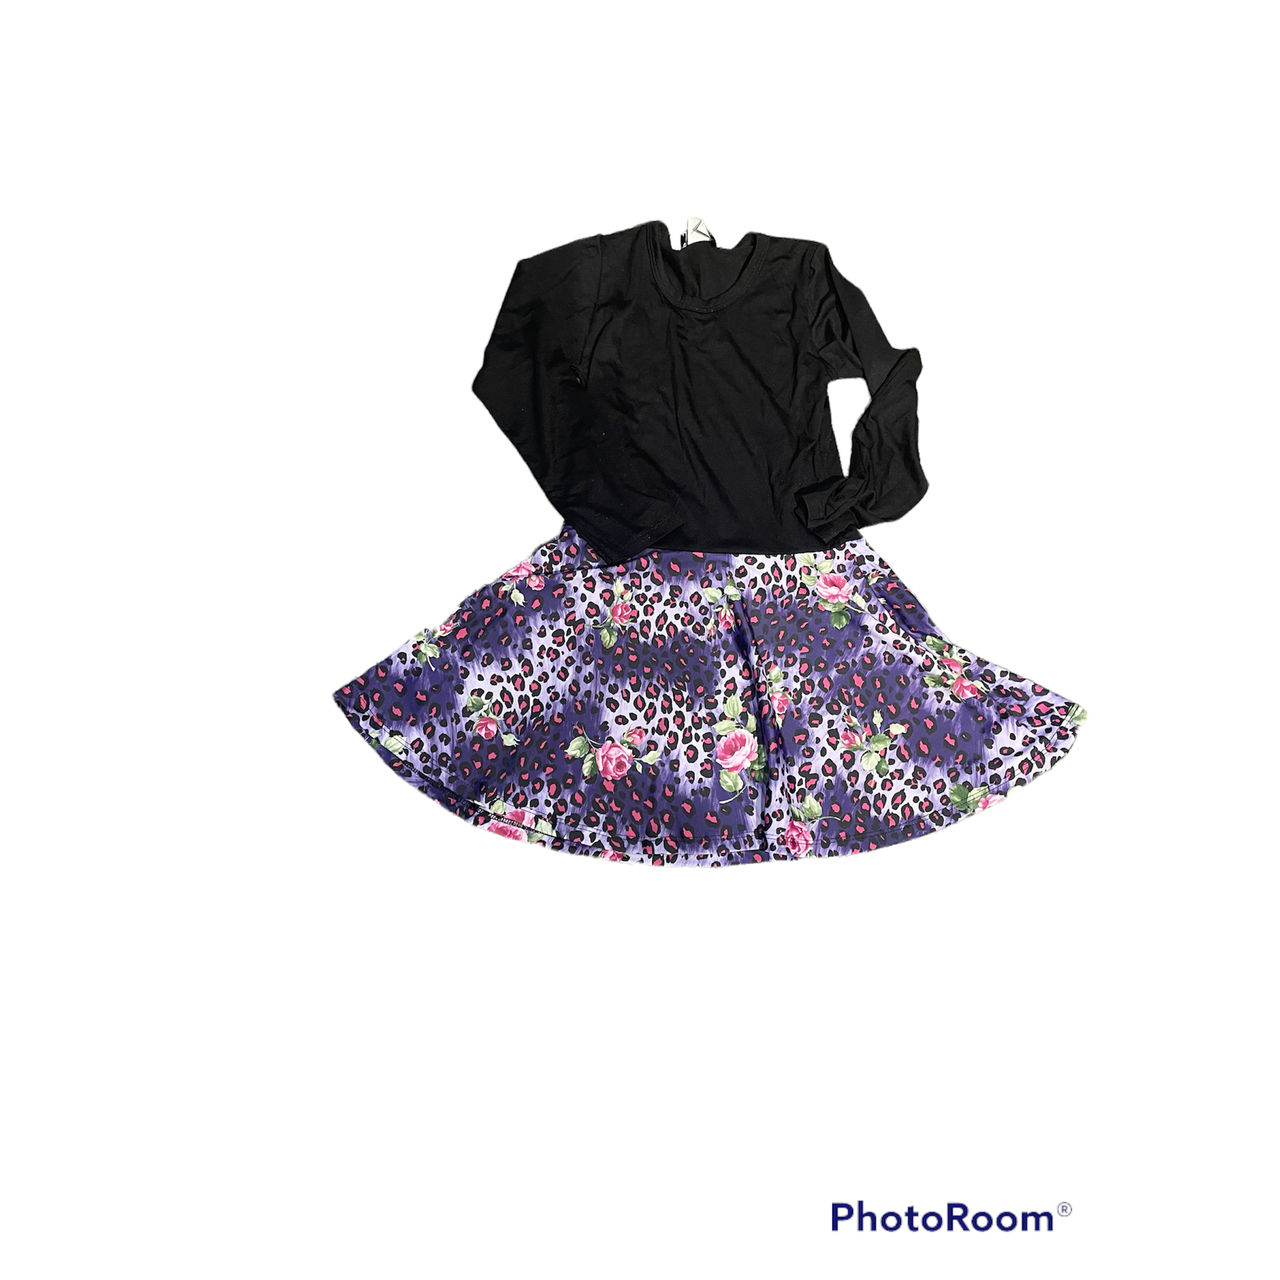 blk/purple rose leopard dress